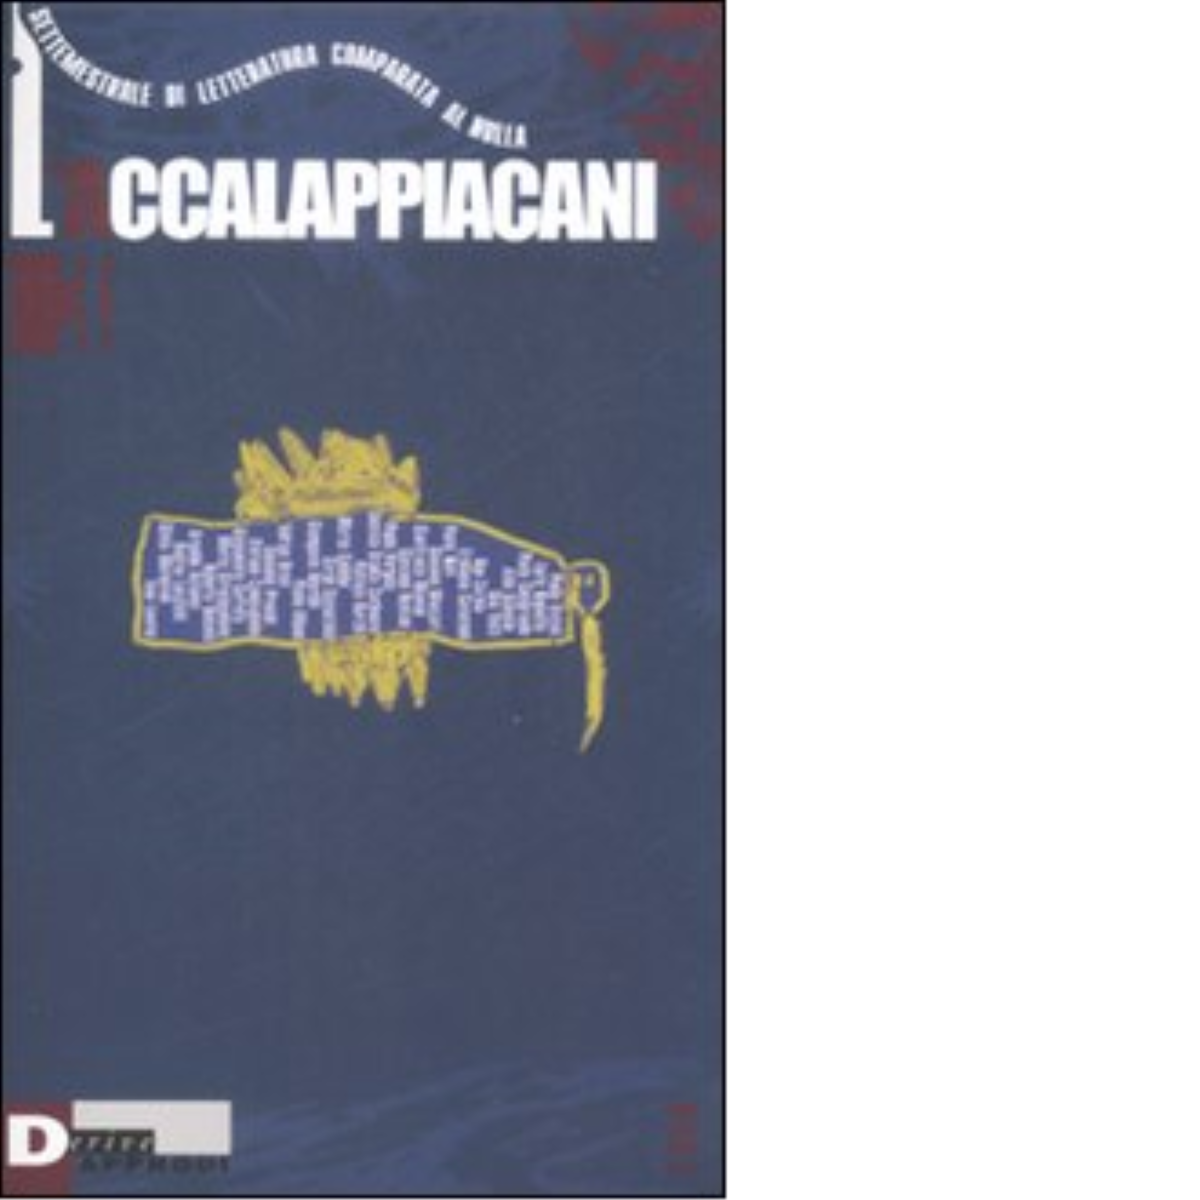 ACCALAPPIACANI - AA.VV. - DeriveApprodi editore, 2009